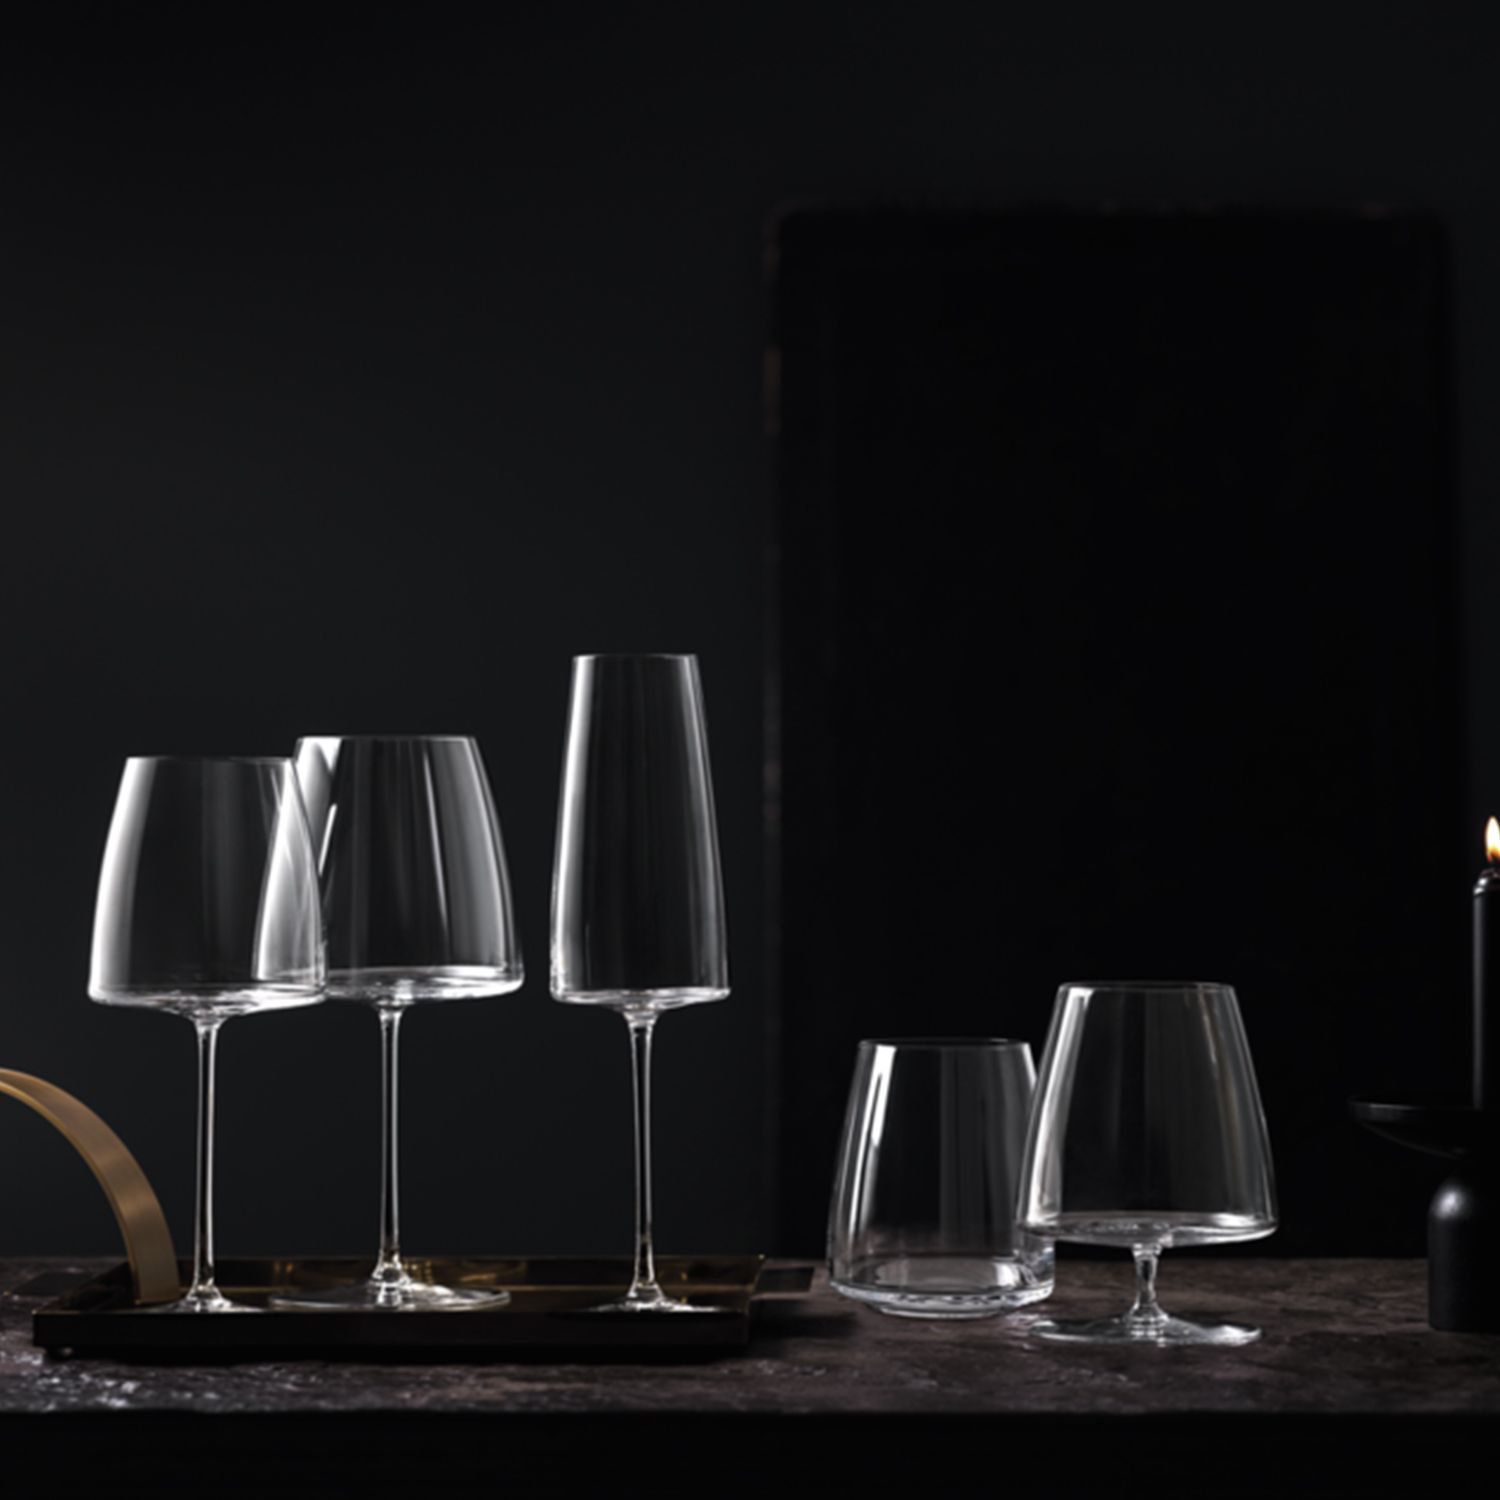 MetroChic Glass Набор бокалов для белого вина 2 шт, 590 мл, 23 см Villeroy & Boch
https://spb.v-b.ru
г.Санкт-Петербург
eshop@v-b.spb.ru
+7(812)3801977